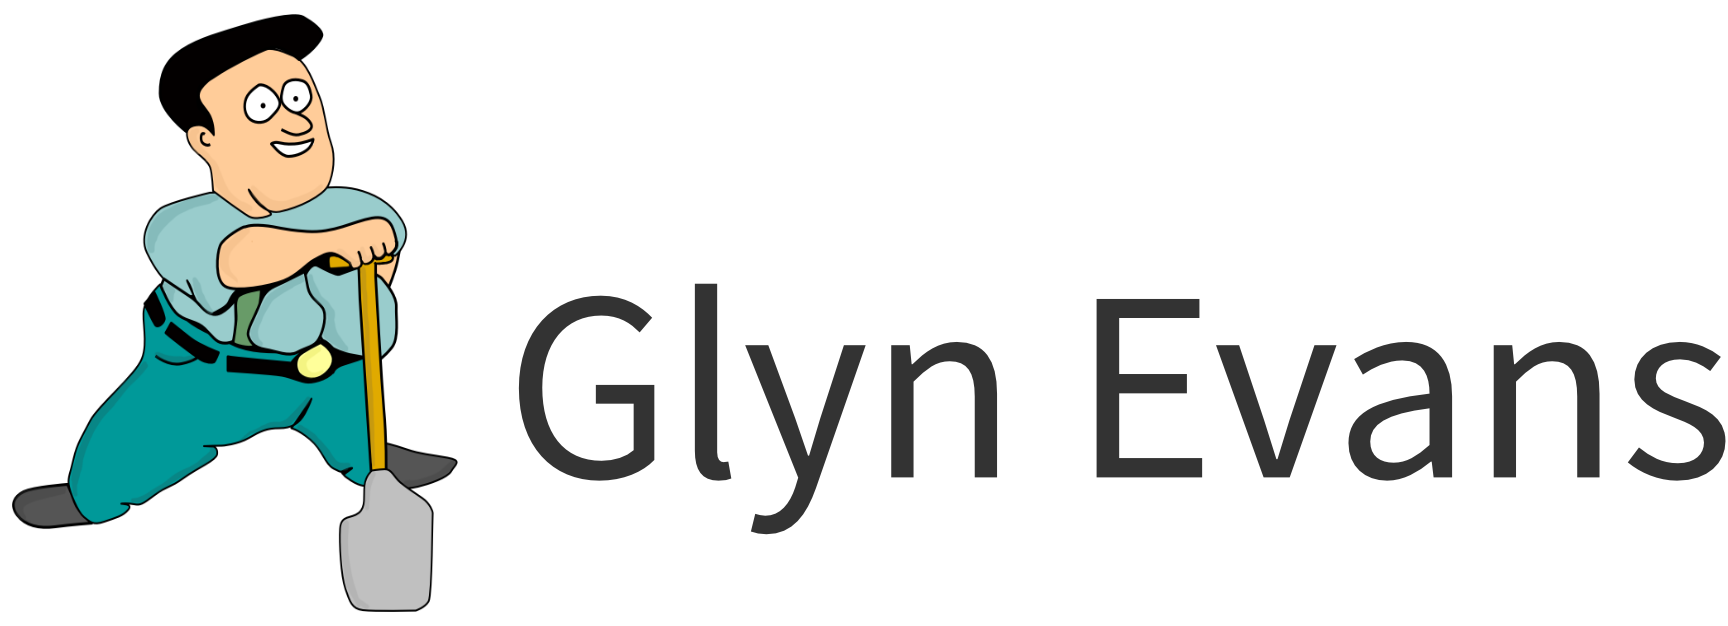 Glyn Evans Paving logo